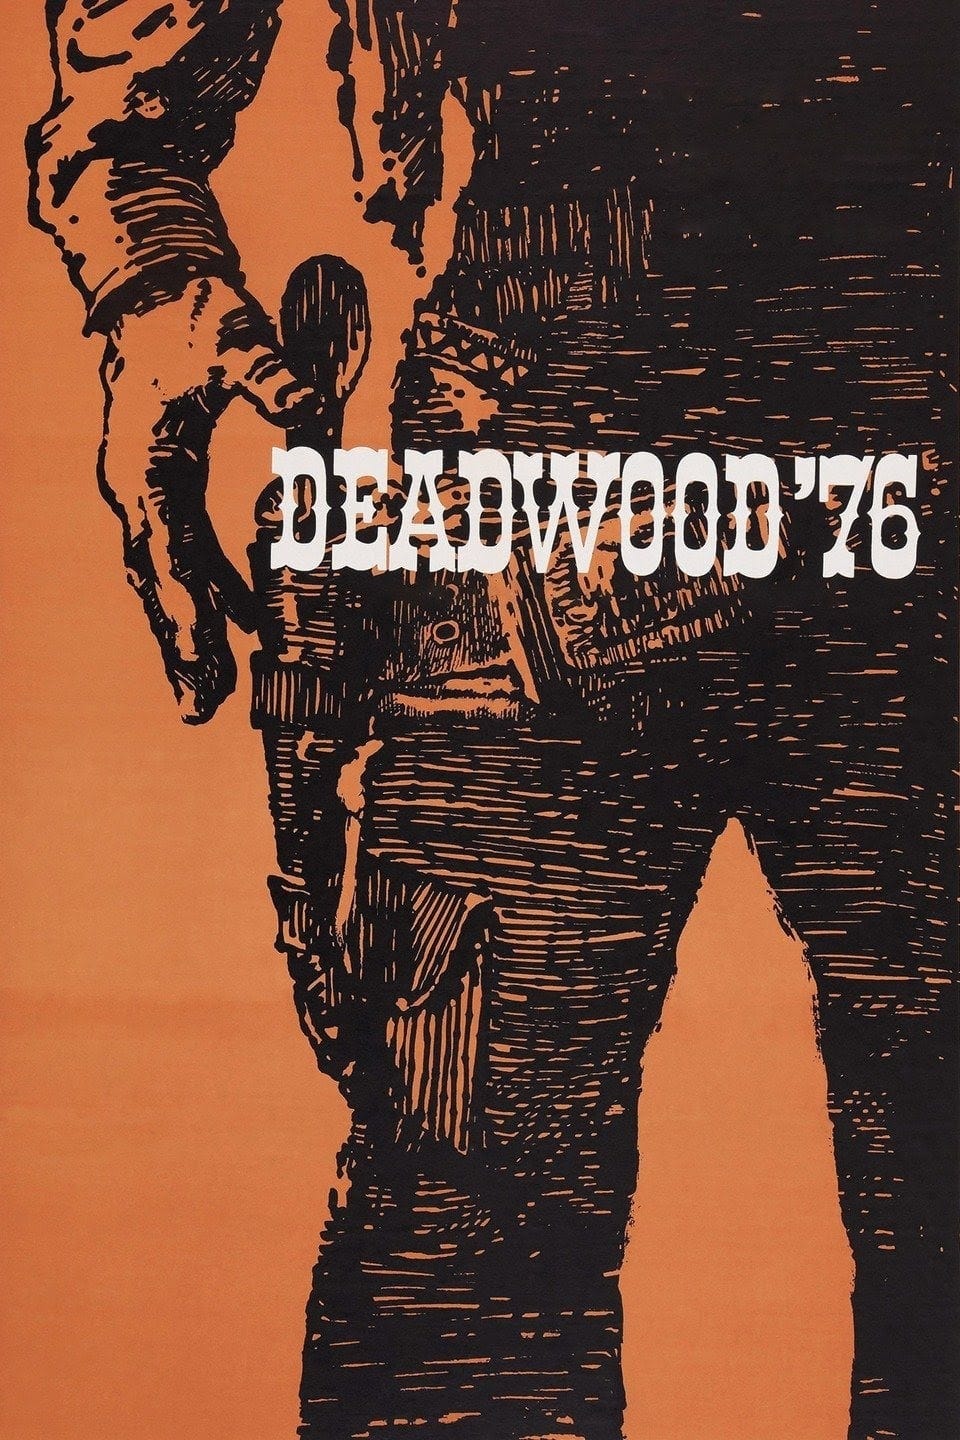 Deadwood '76 (1965) | Poster